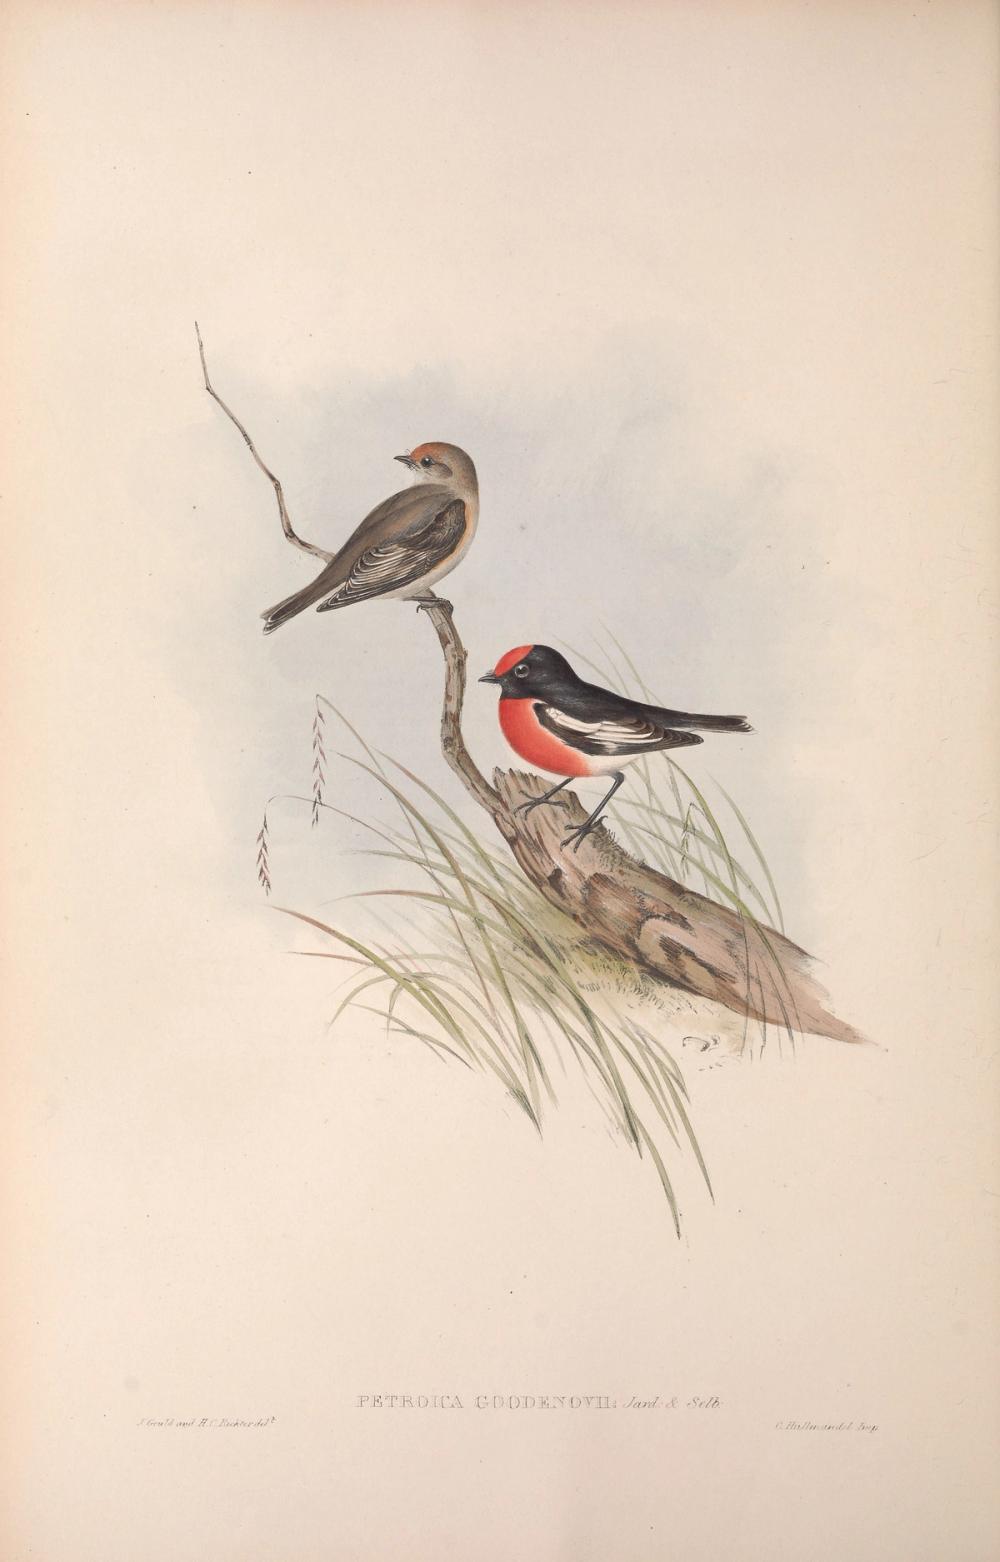 Red-capped robin, 1854 - Elizabeth Gould 